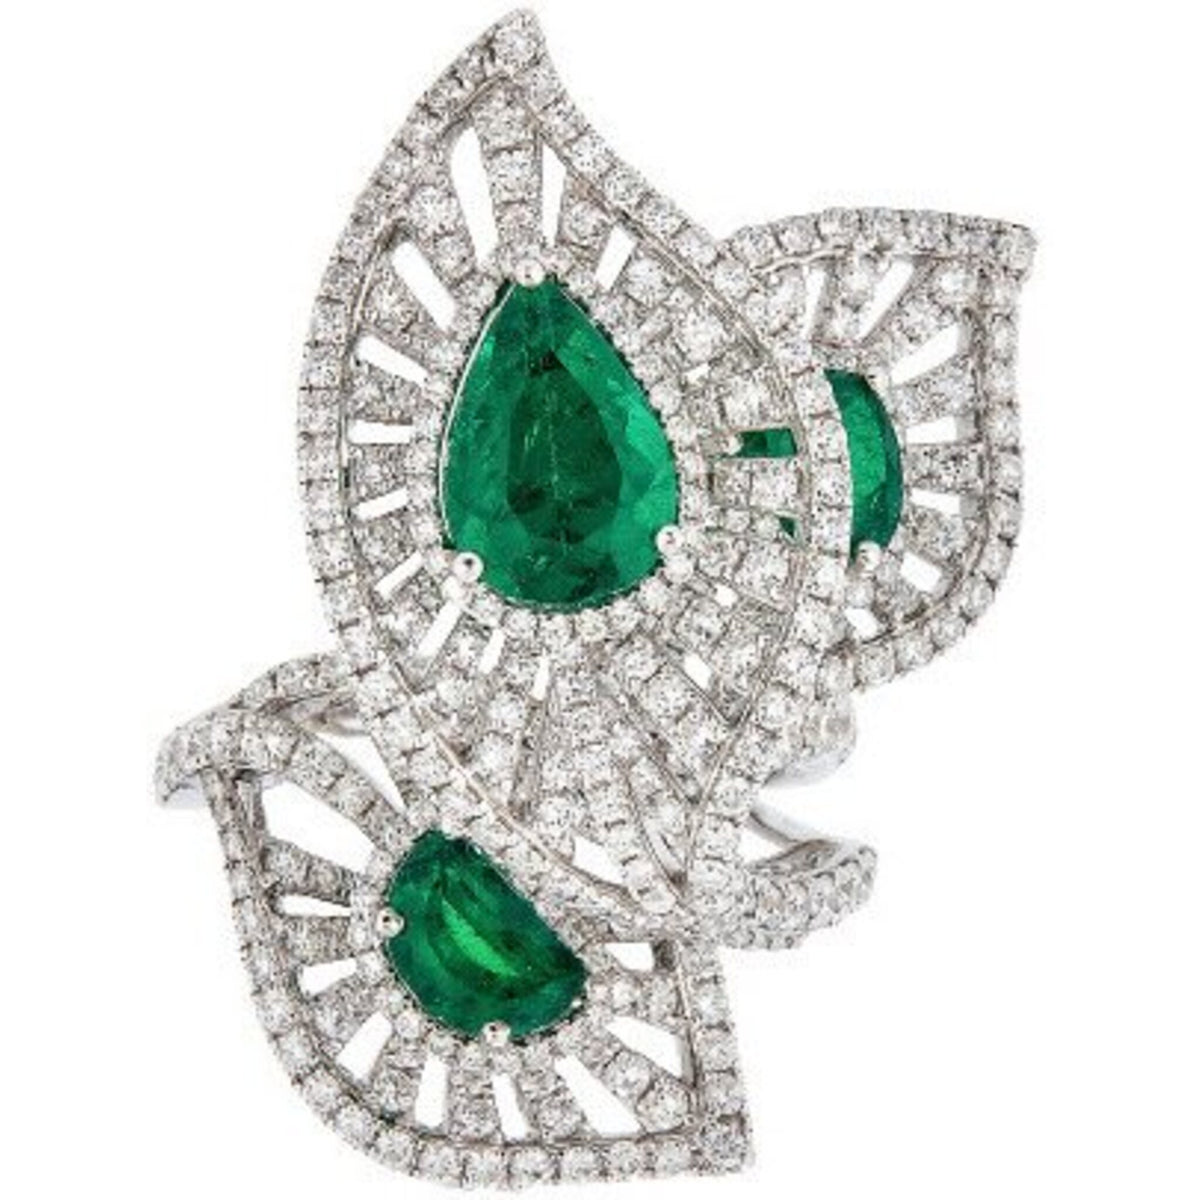 Piranesi - Valenza Ring in Emerald - 18K White Gold